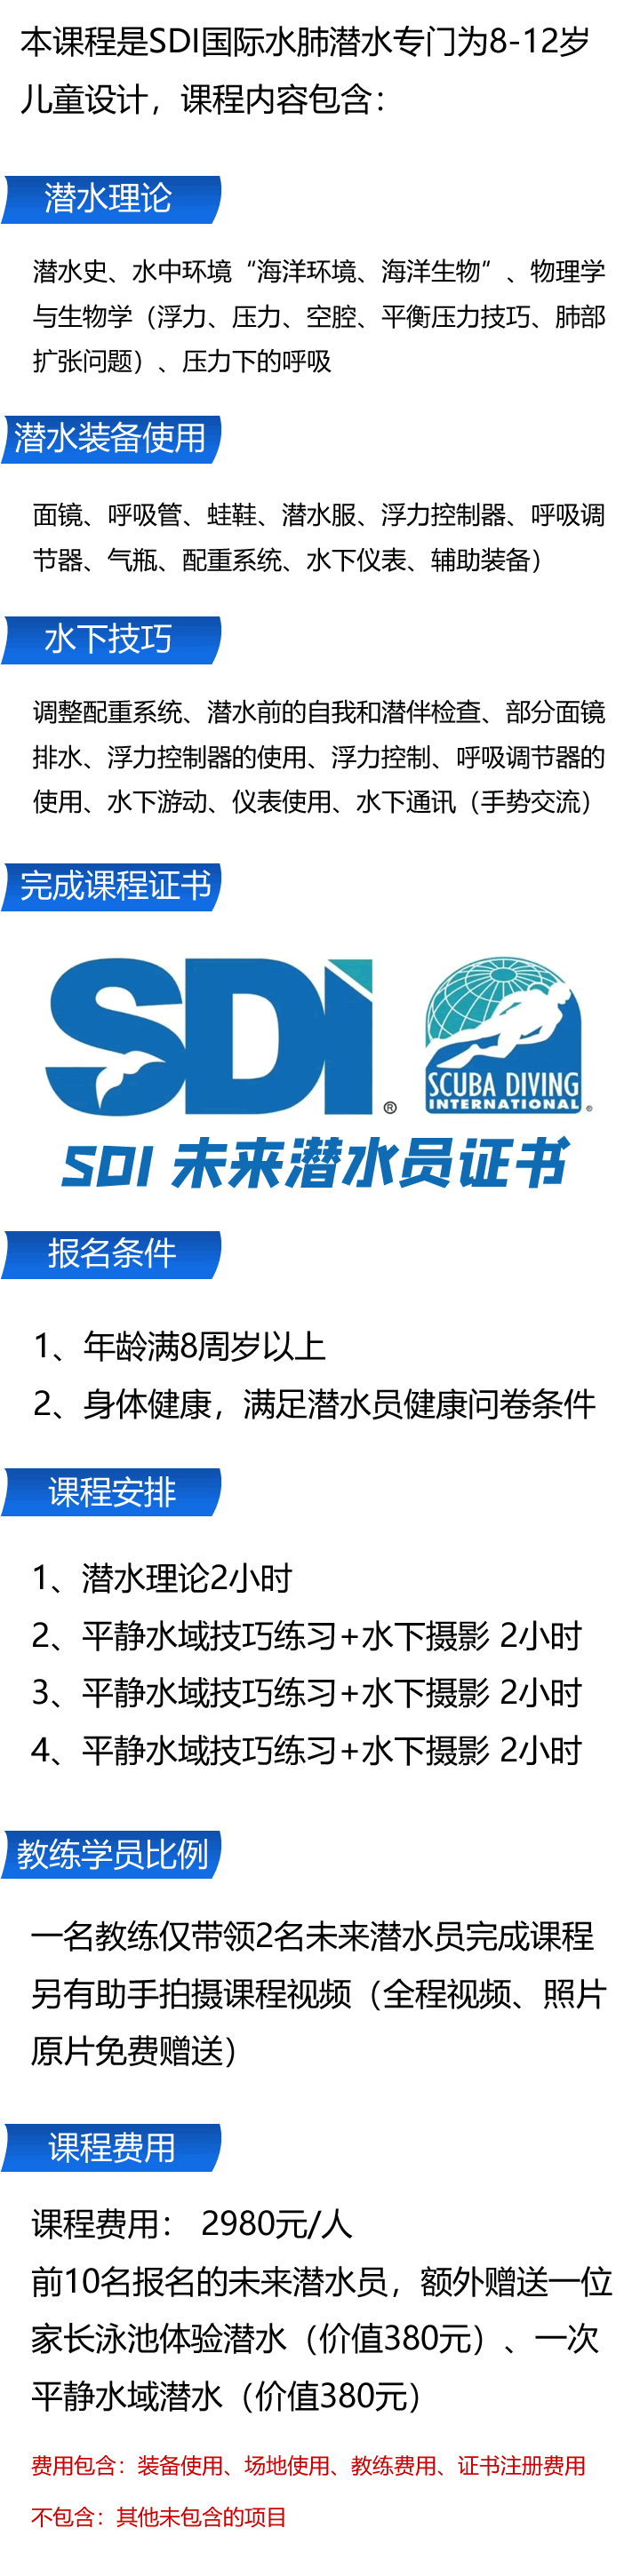 SDI未来潜水员课程